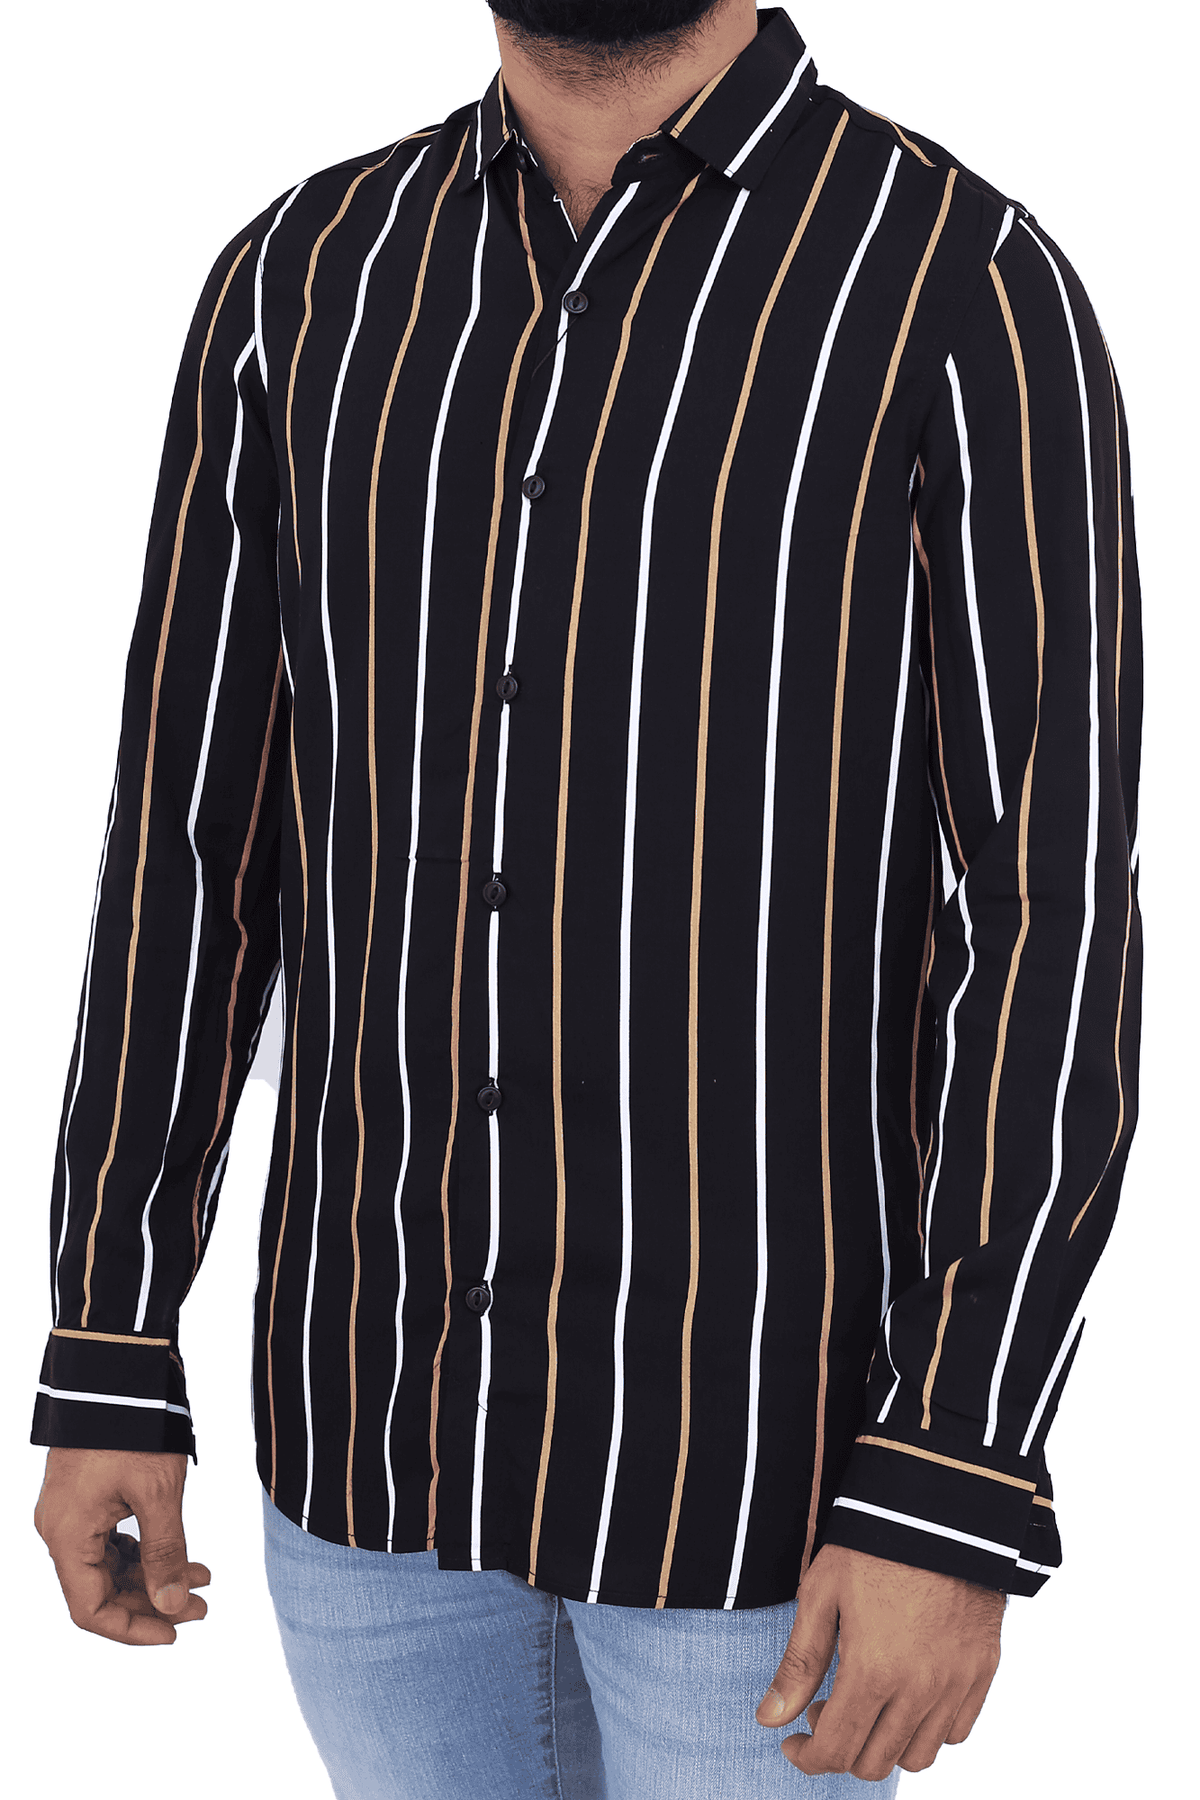 Men's Casual Shirt SHC-1749 Brown Stripe